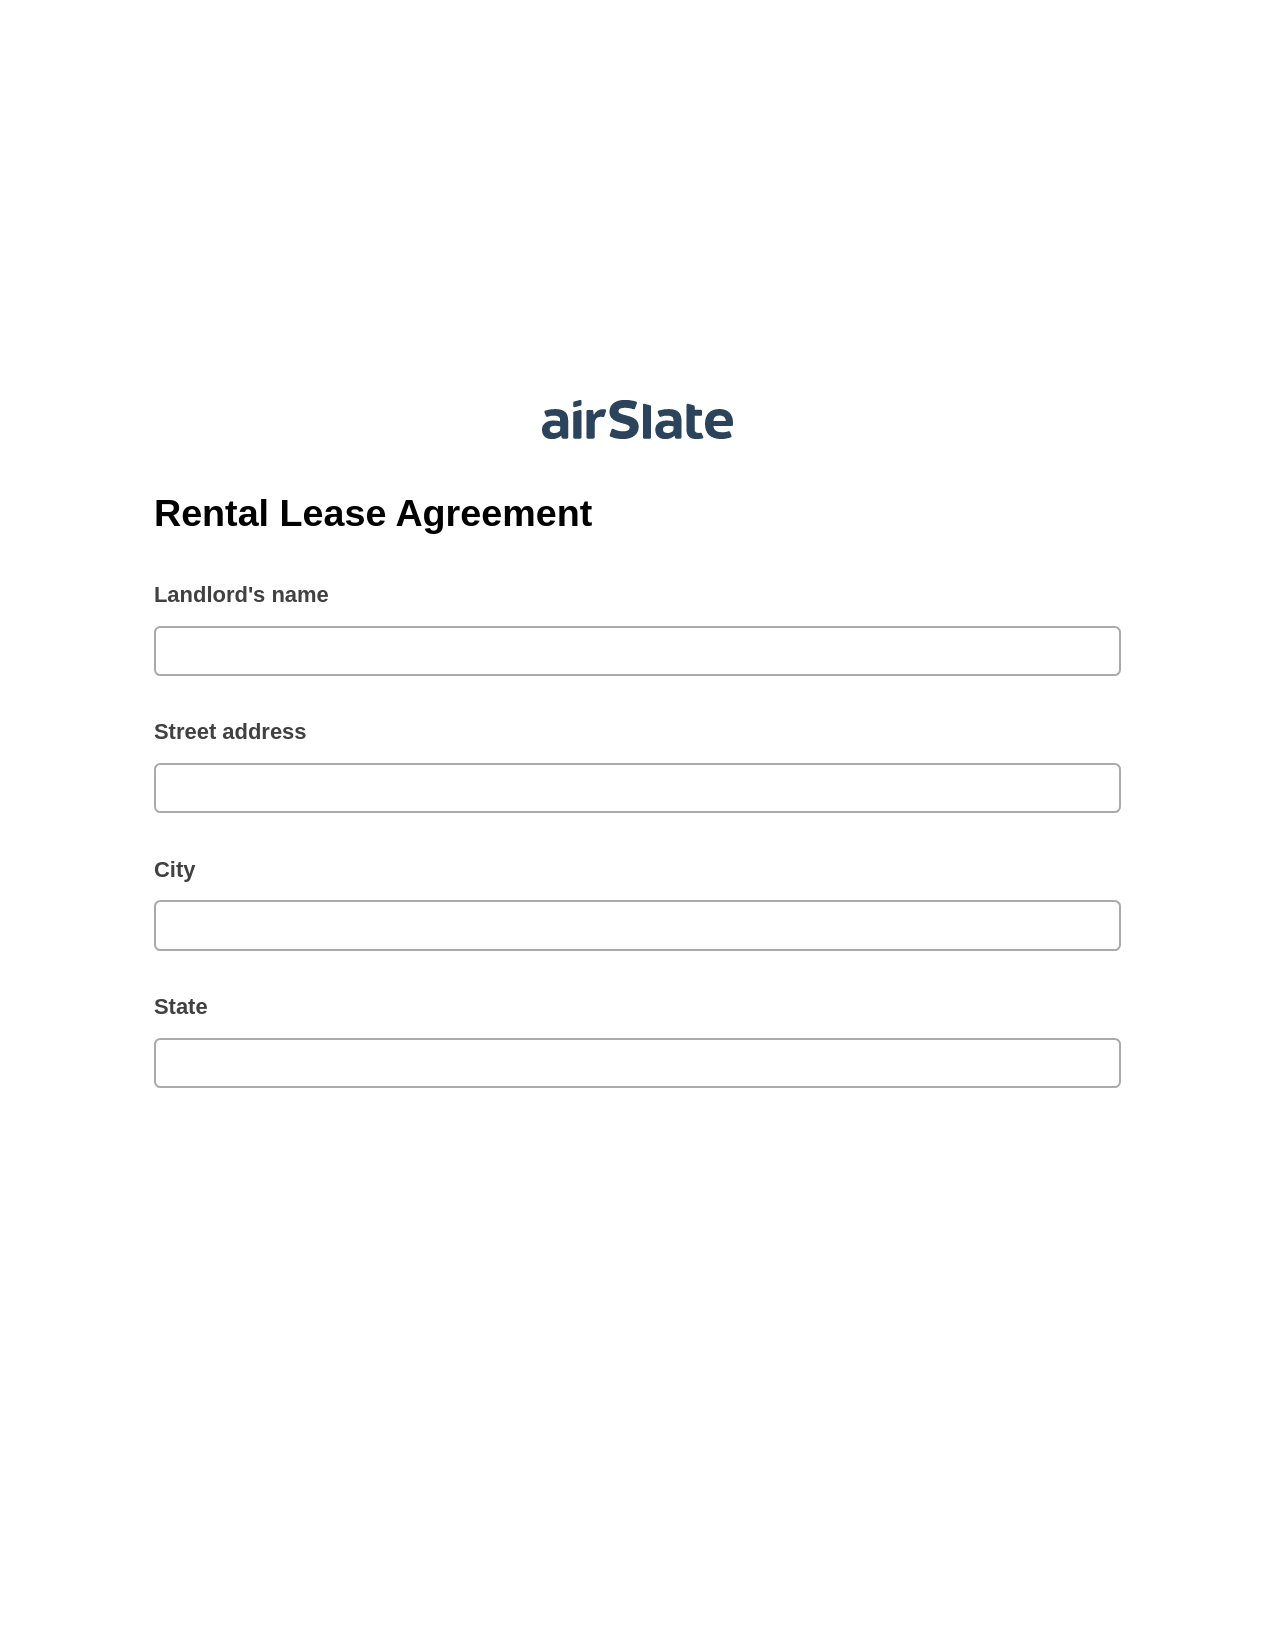 Rental Lease Agreement Pre-fill from CSV File Dropdown Options Bot, Invoke Salesforce Process Bot, Export to MySQL Bot